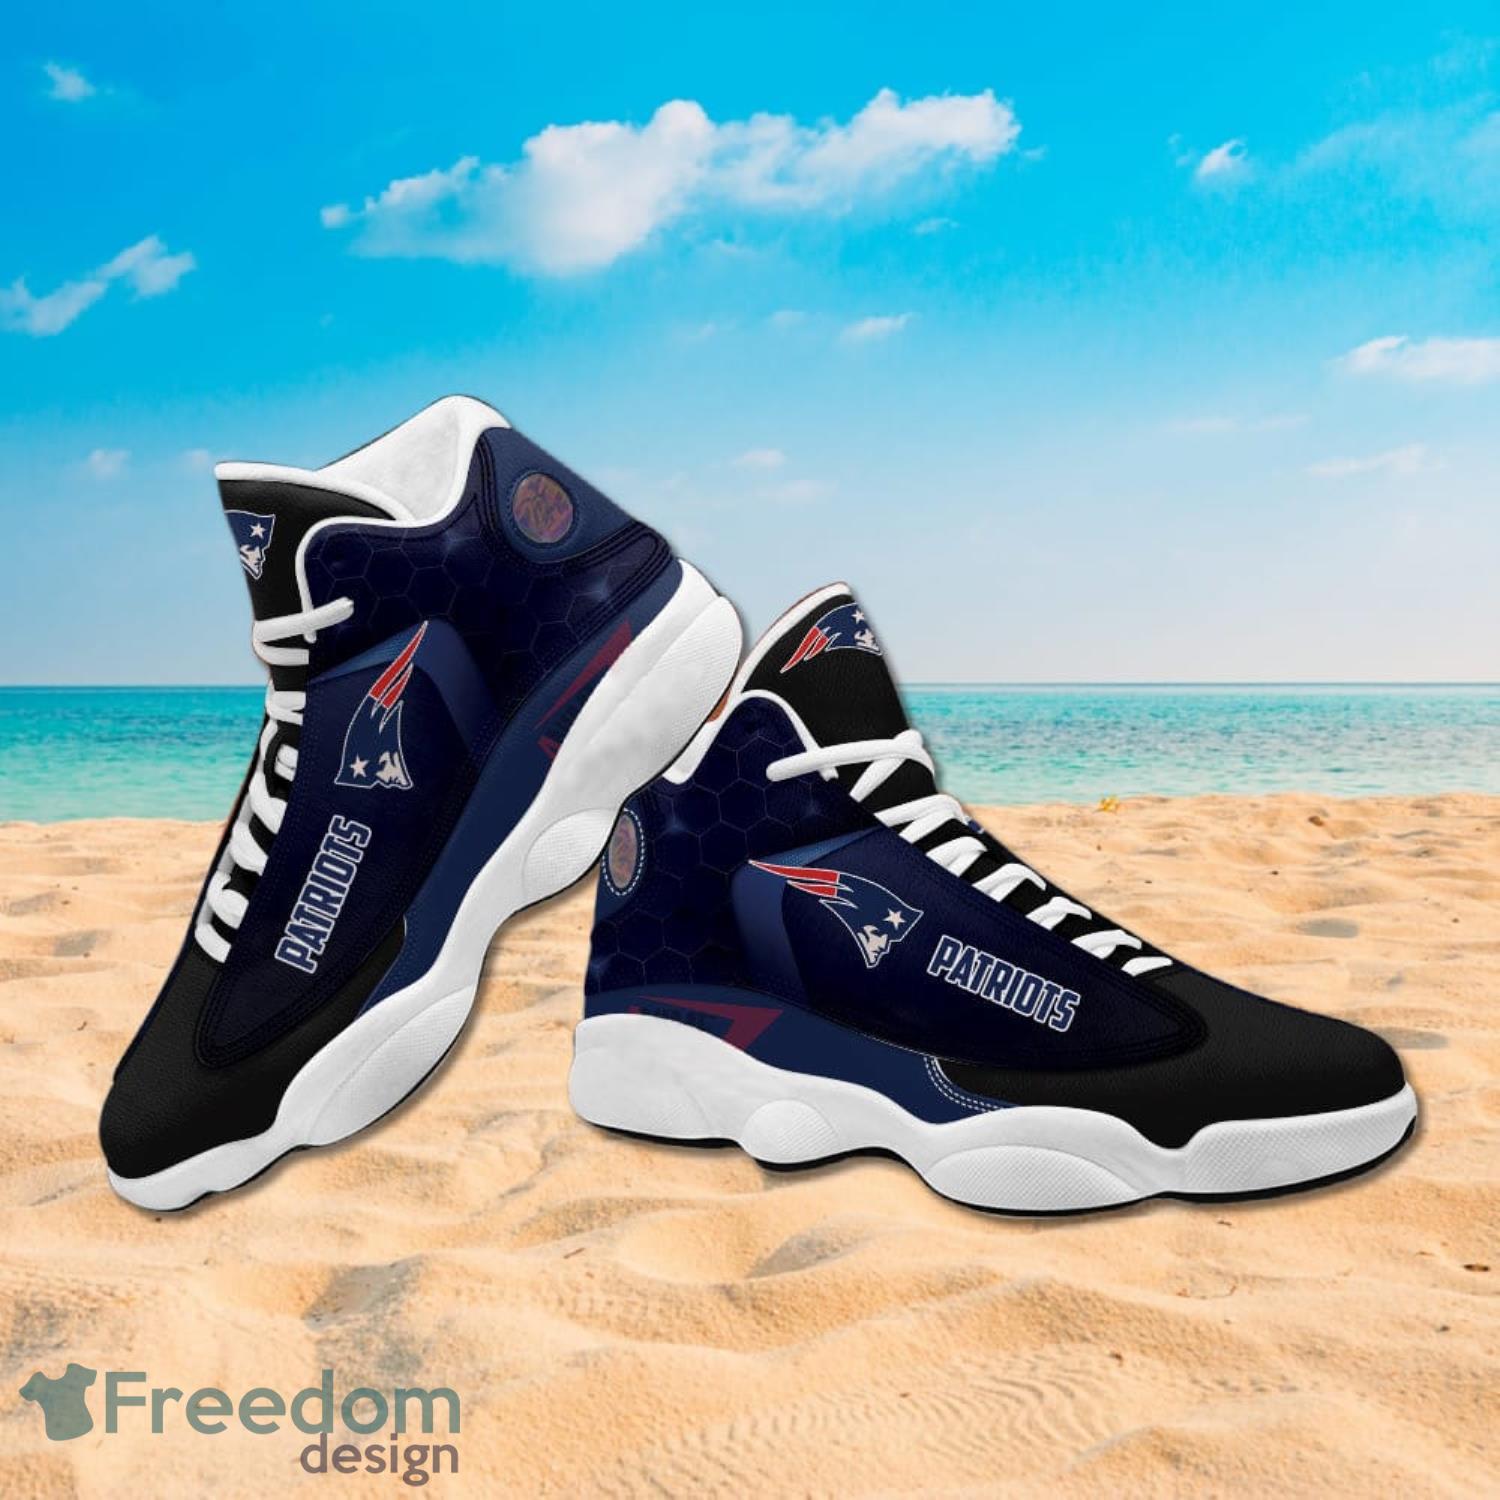 New England Patriots NFL Personalized Air Jordan 13 Sport Shoes - Growkoc